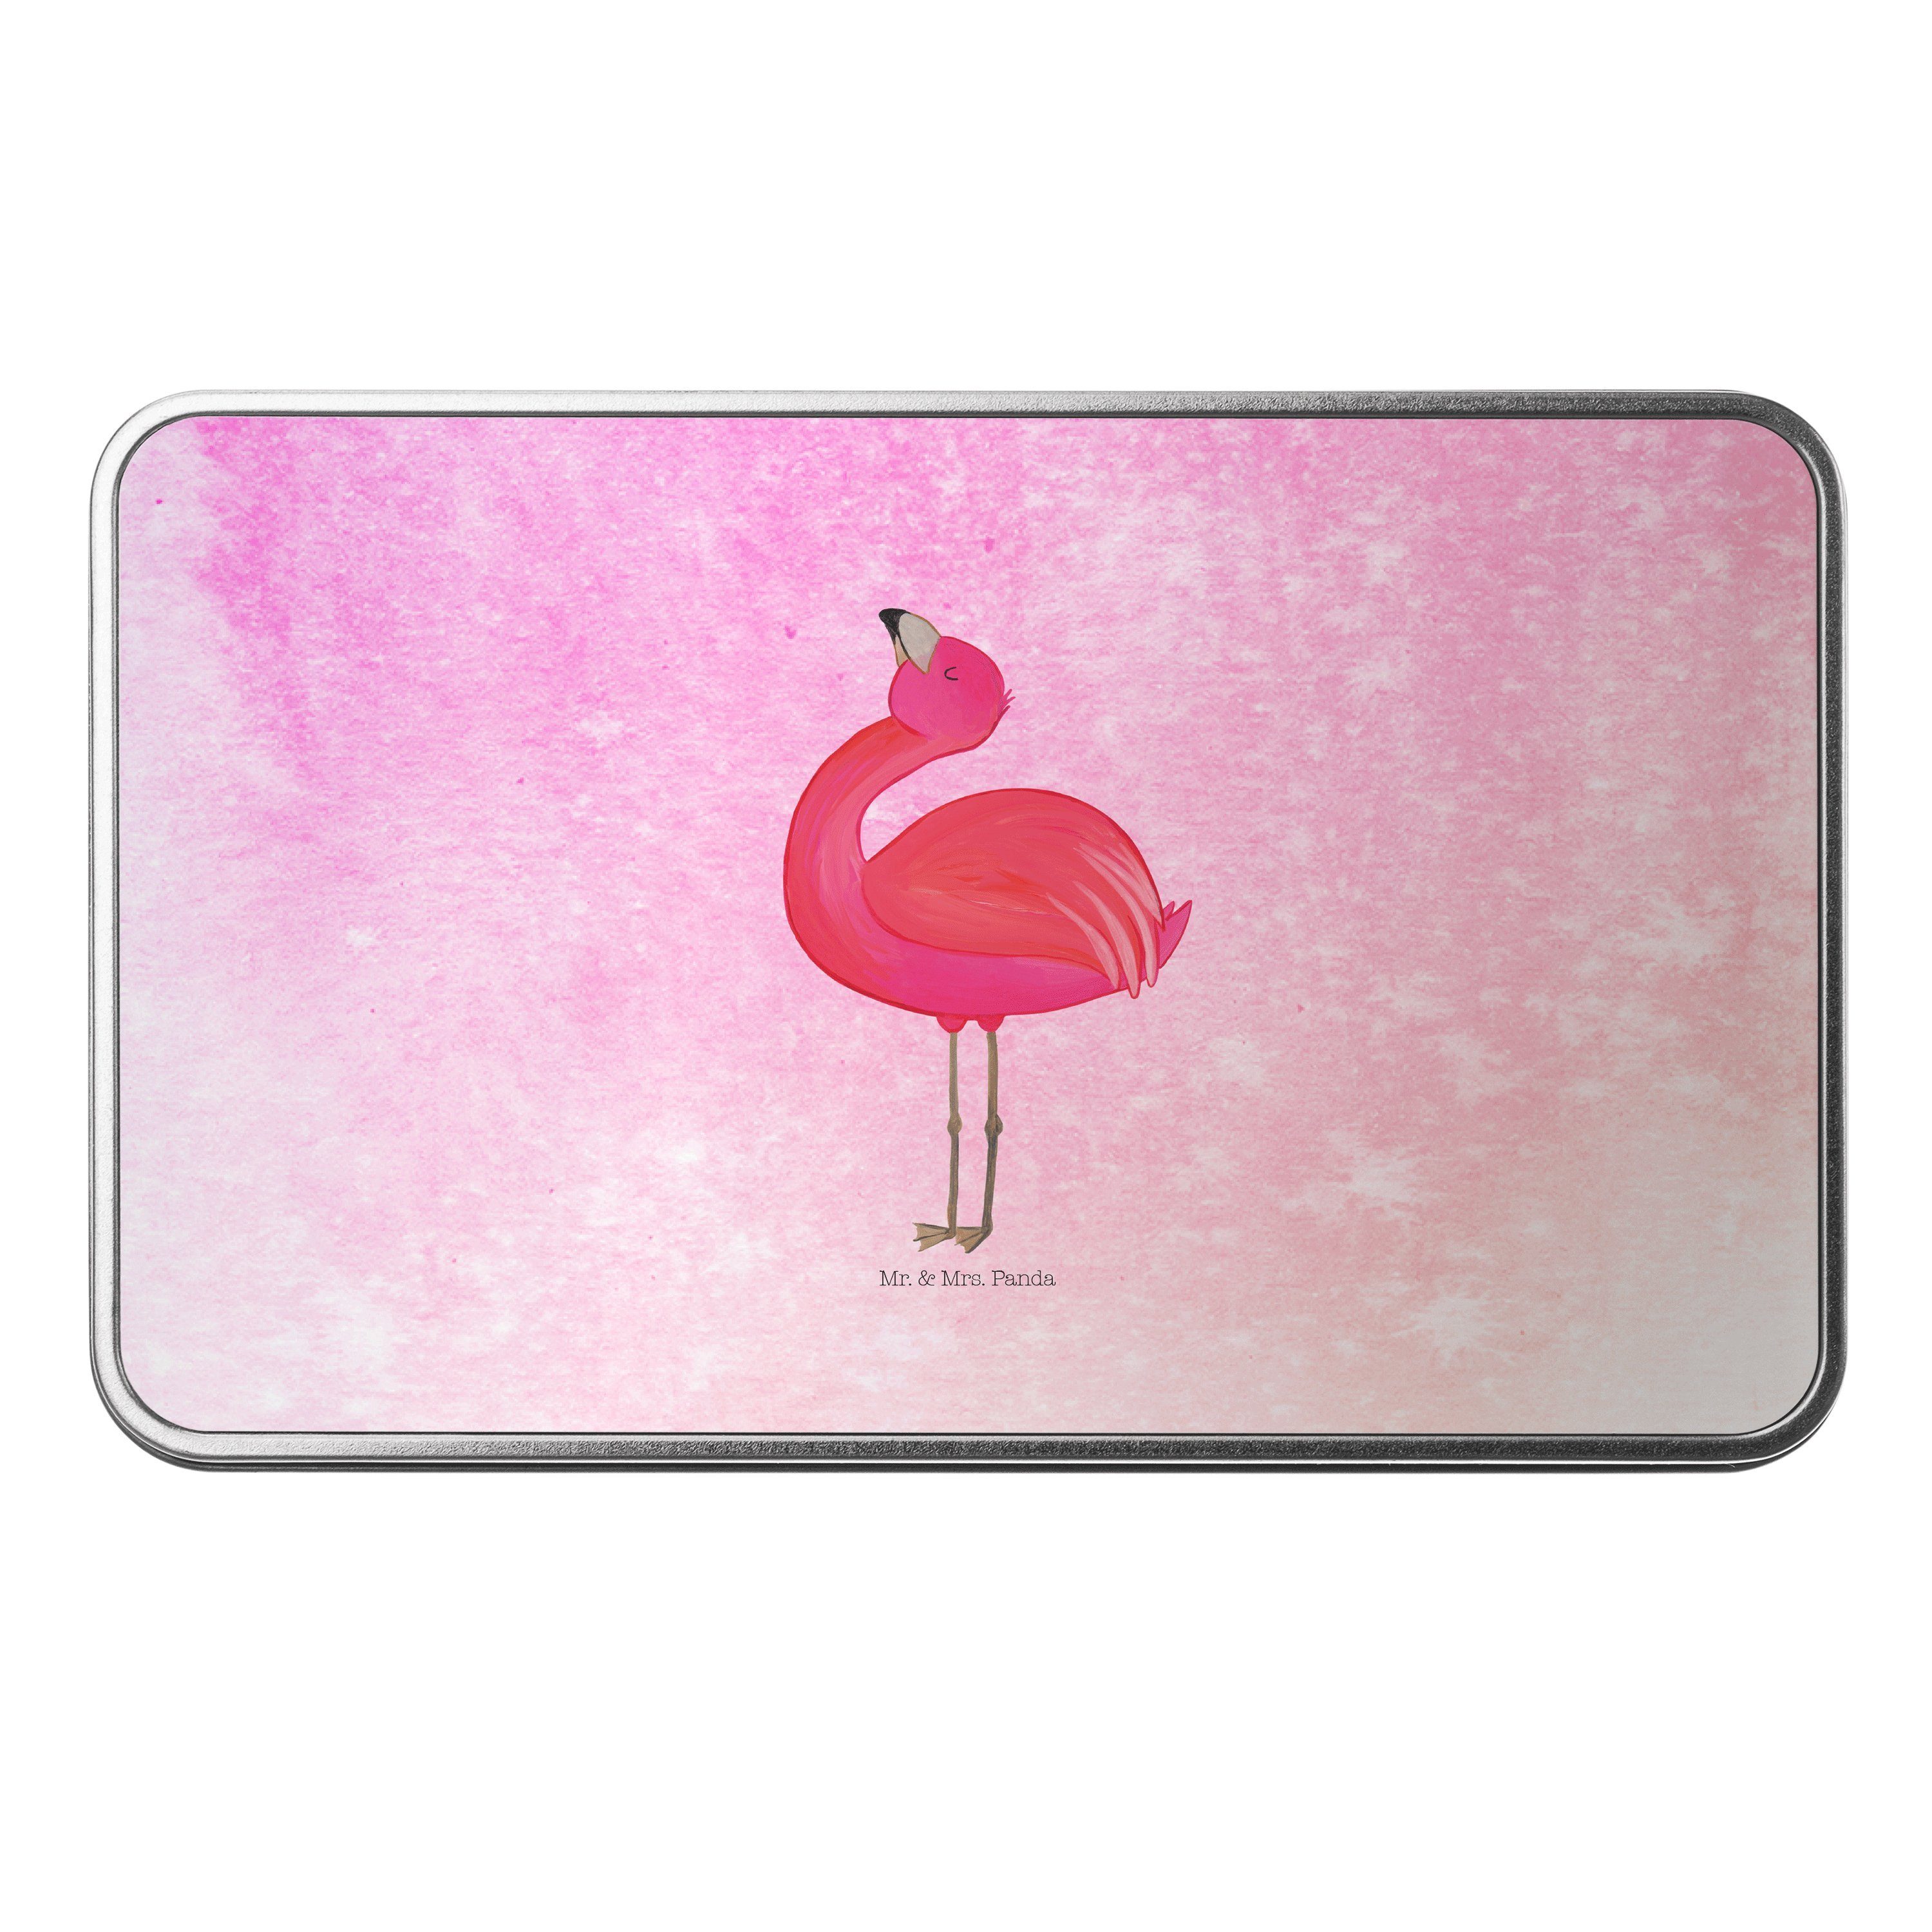 Mama Mr. Panda (1 & - Flamingo Metalldose, Aquarell - Mrs. stolz St) Pink Geschenk, Blechbox, Dose